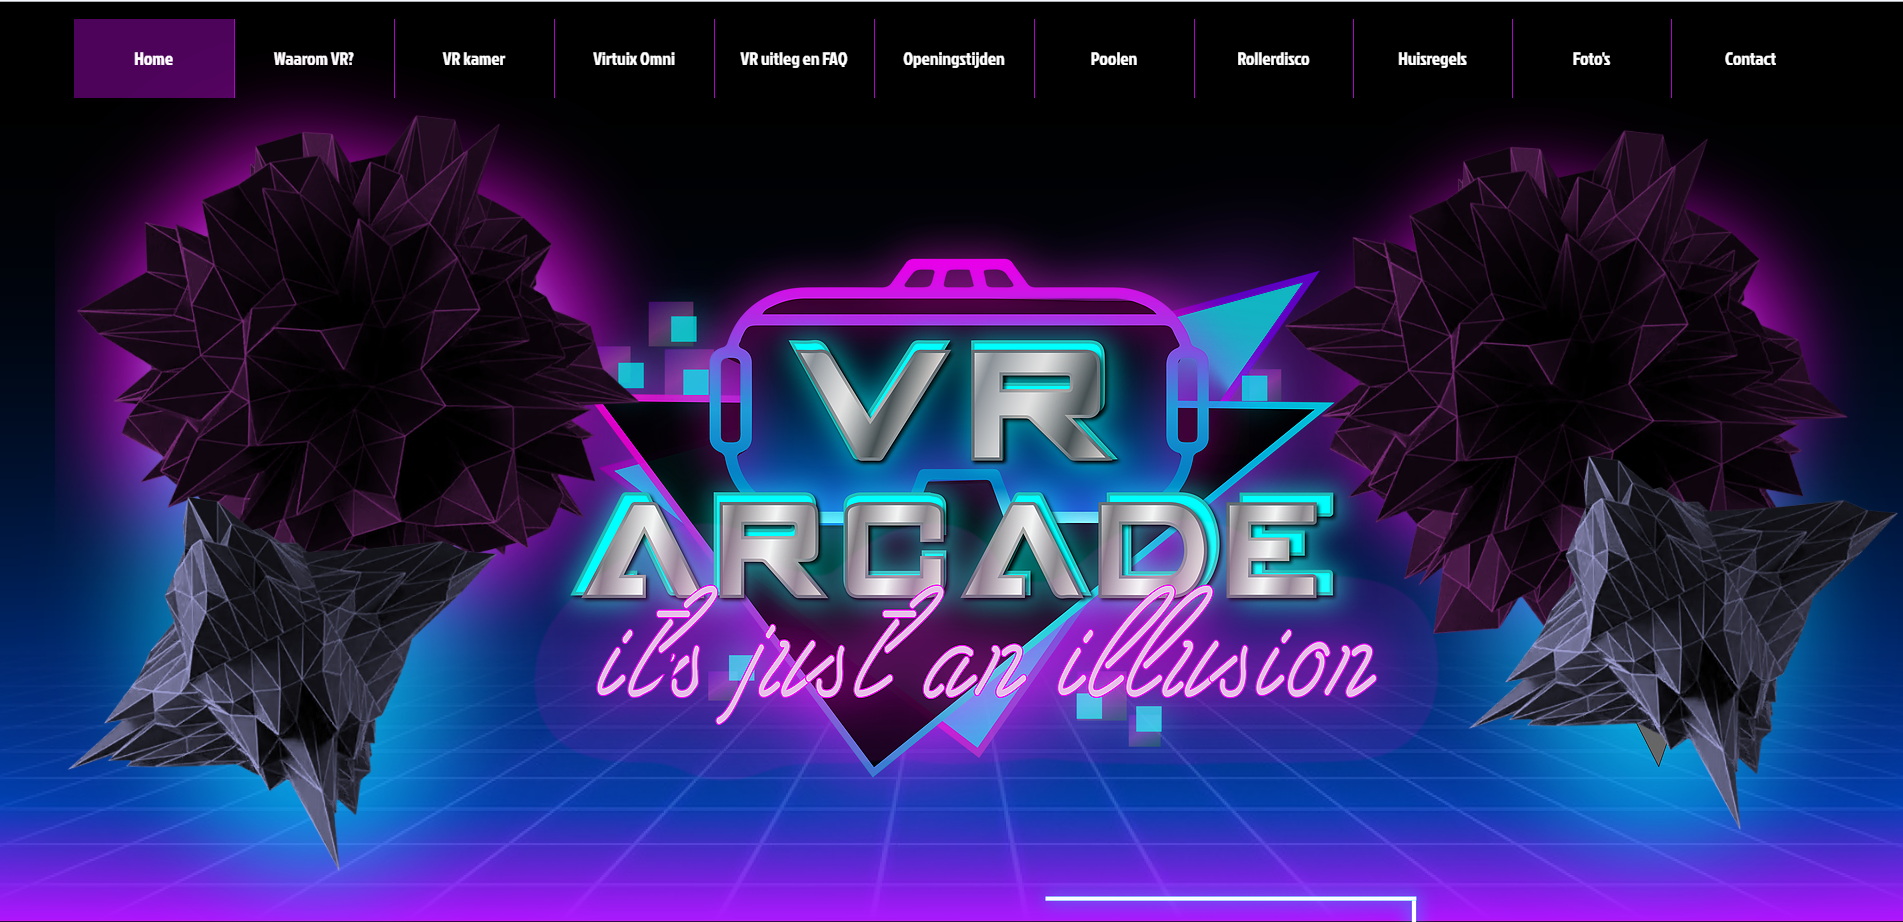 VR Arcade - VR Arcade Rotterdam